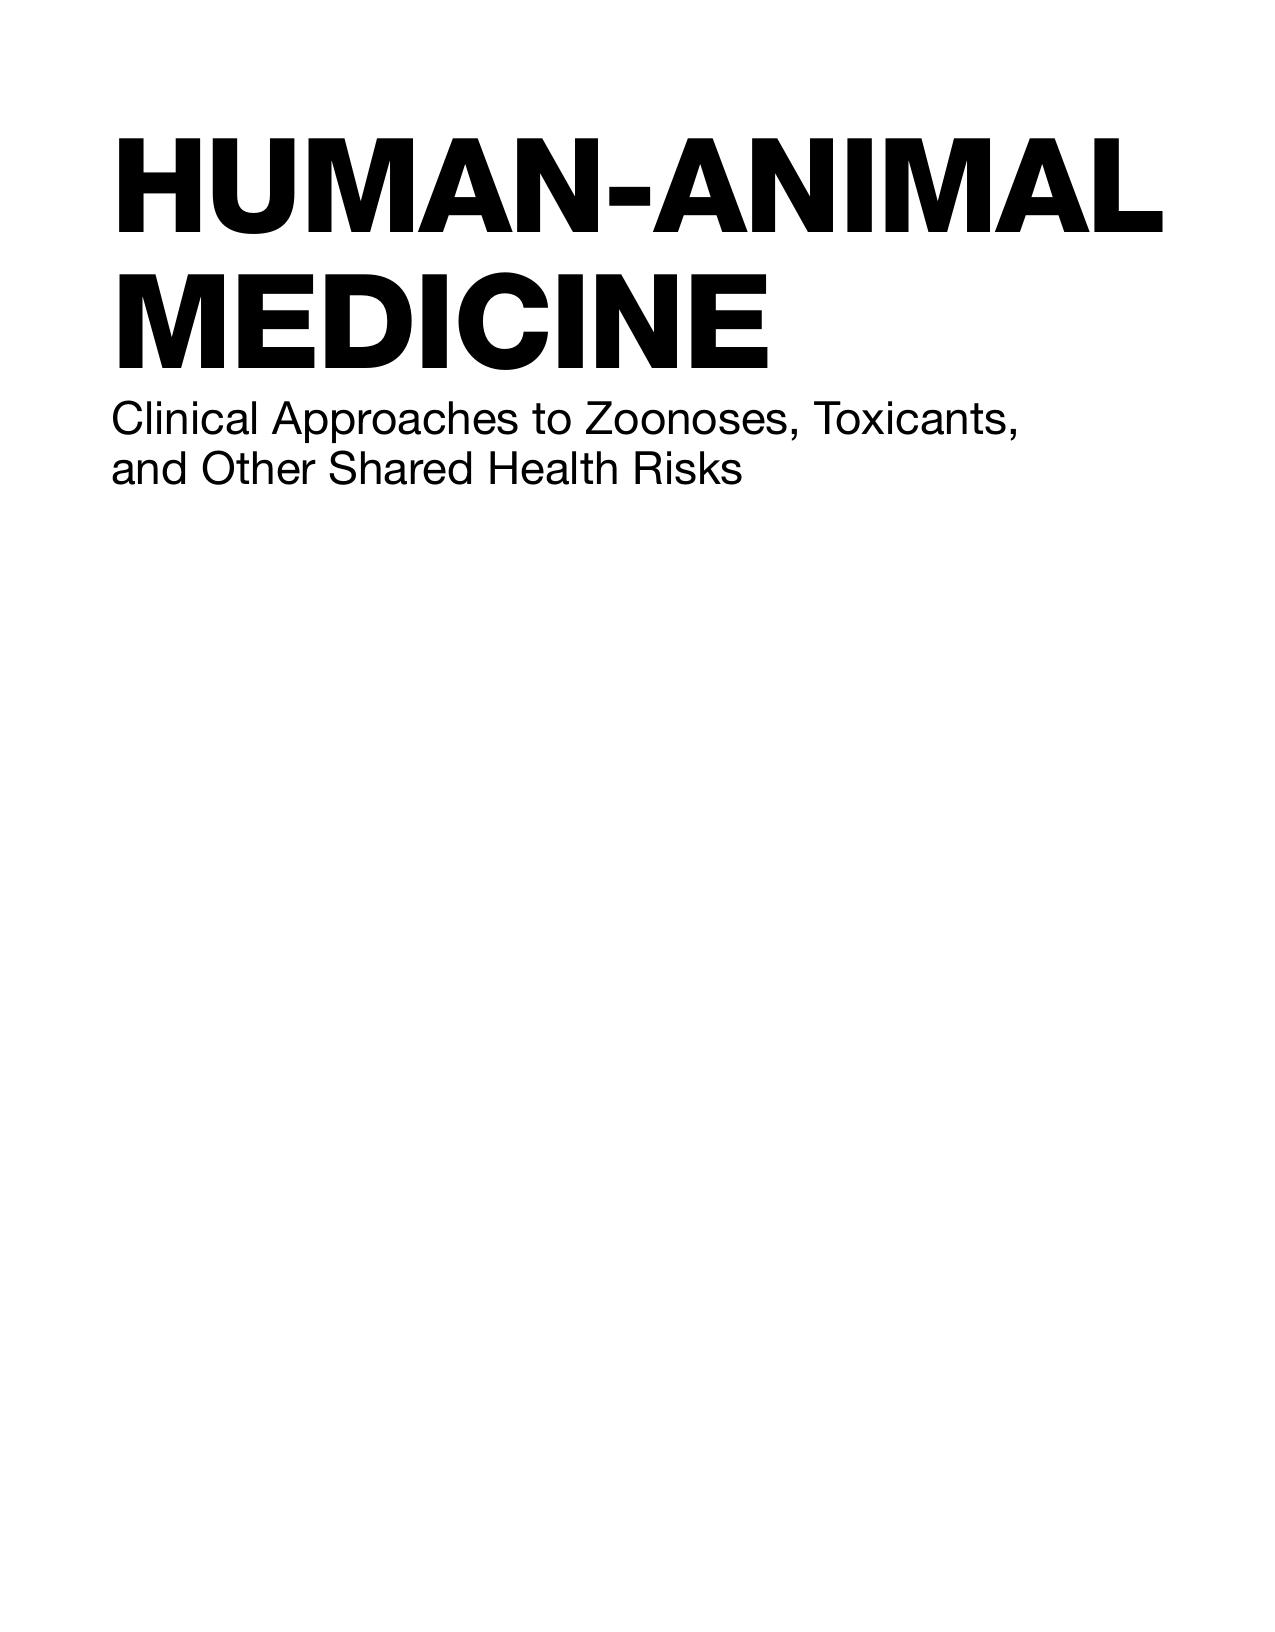 Human-Animal Medicine